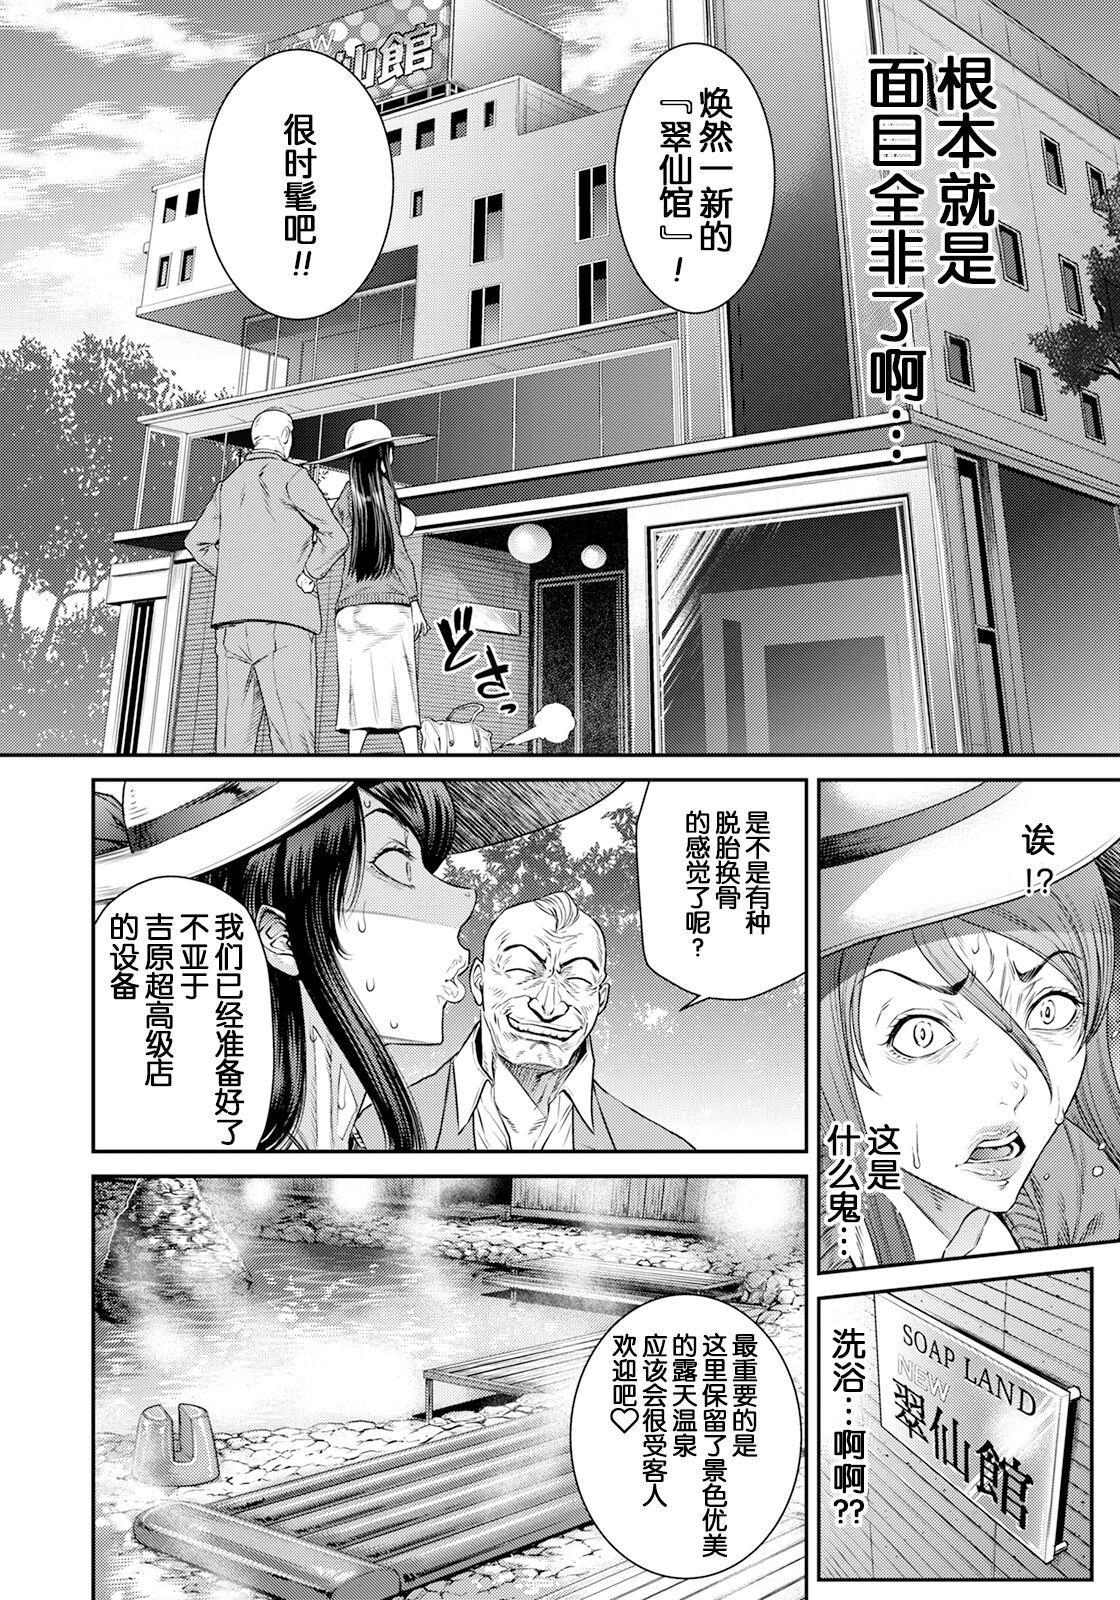 Mask Shinise Ryokan Caught - Page 7